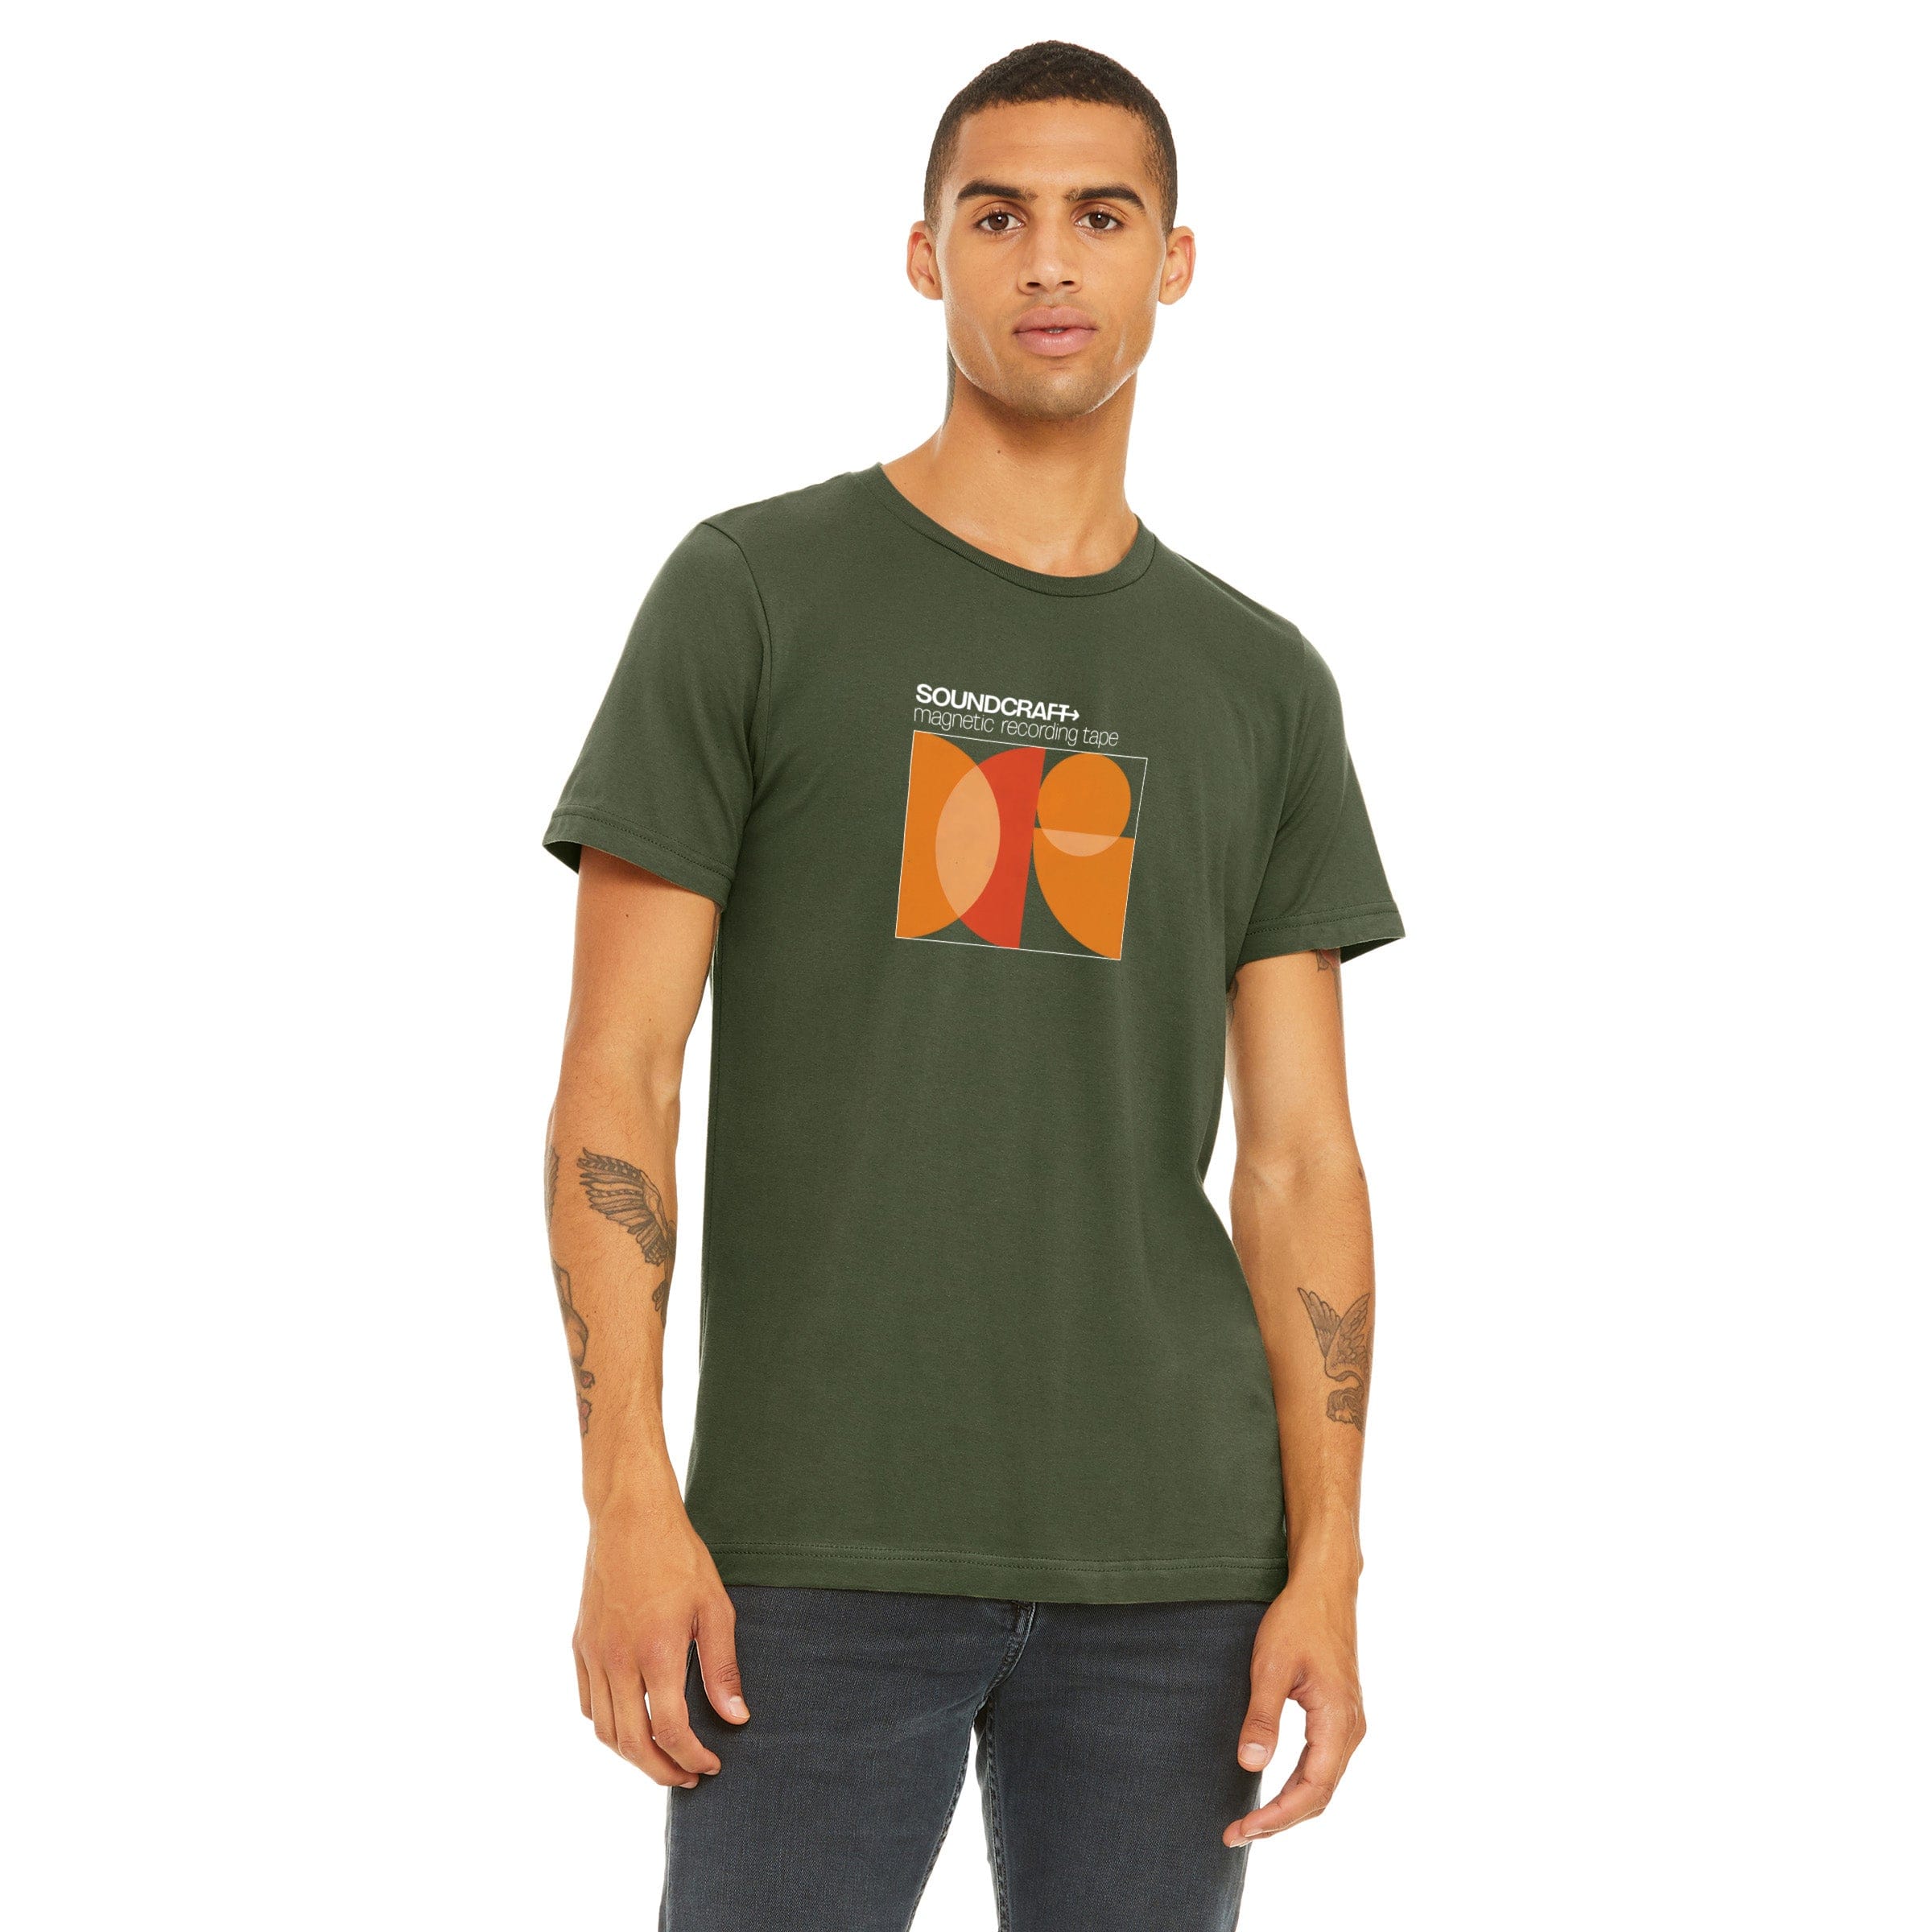 Soundcraft: Magnetic Audio Tape T-Shirt